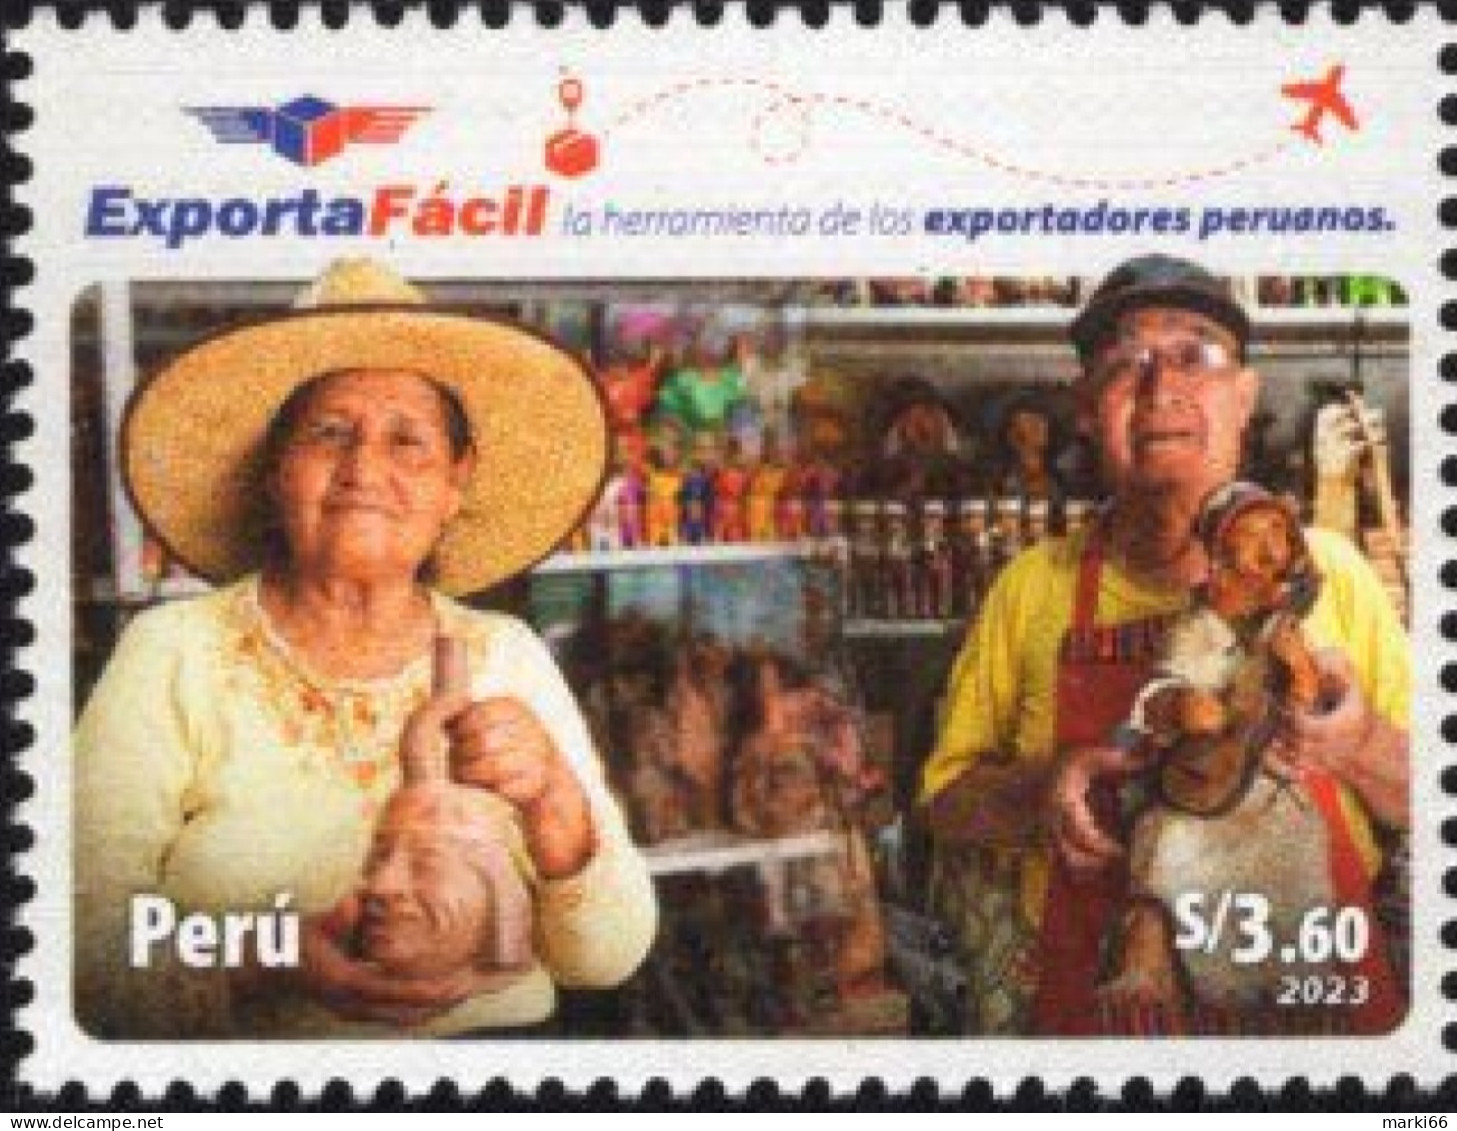 Peru - 2023 - Peruvian Export - Mint Stamp - Perú